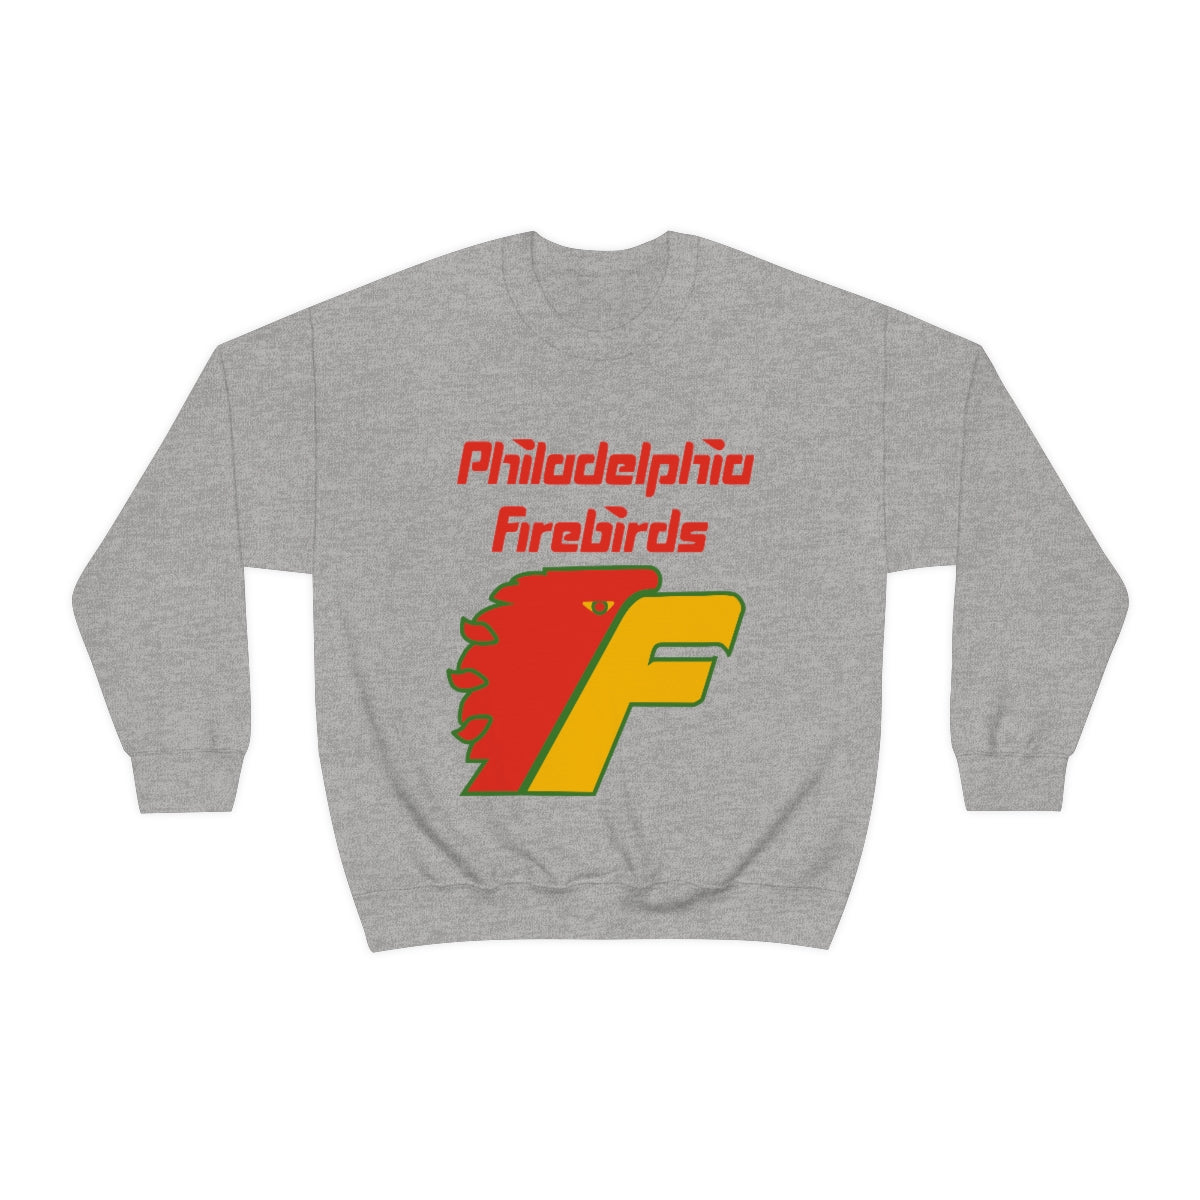 Philadelphia Firebirds Crewneck Sweatshirt